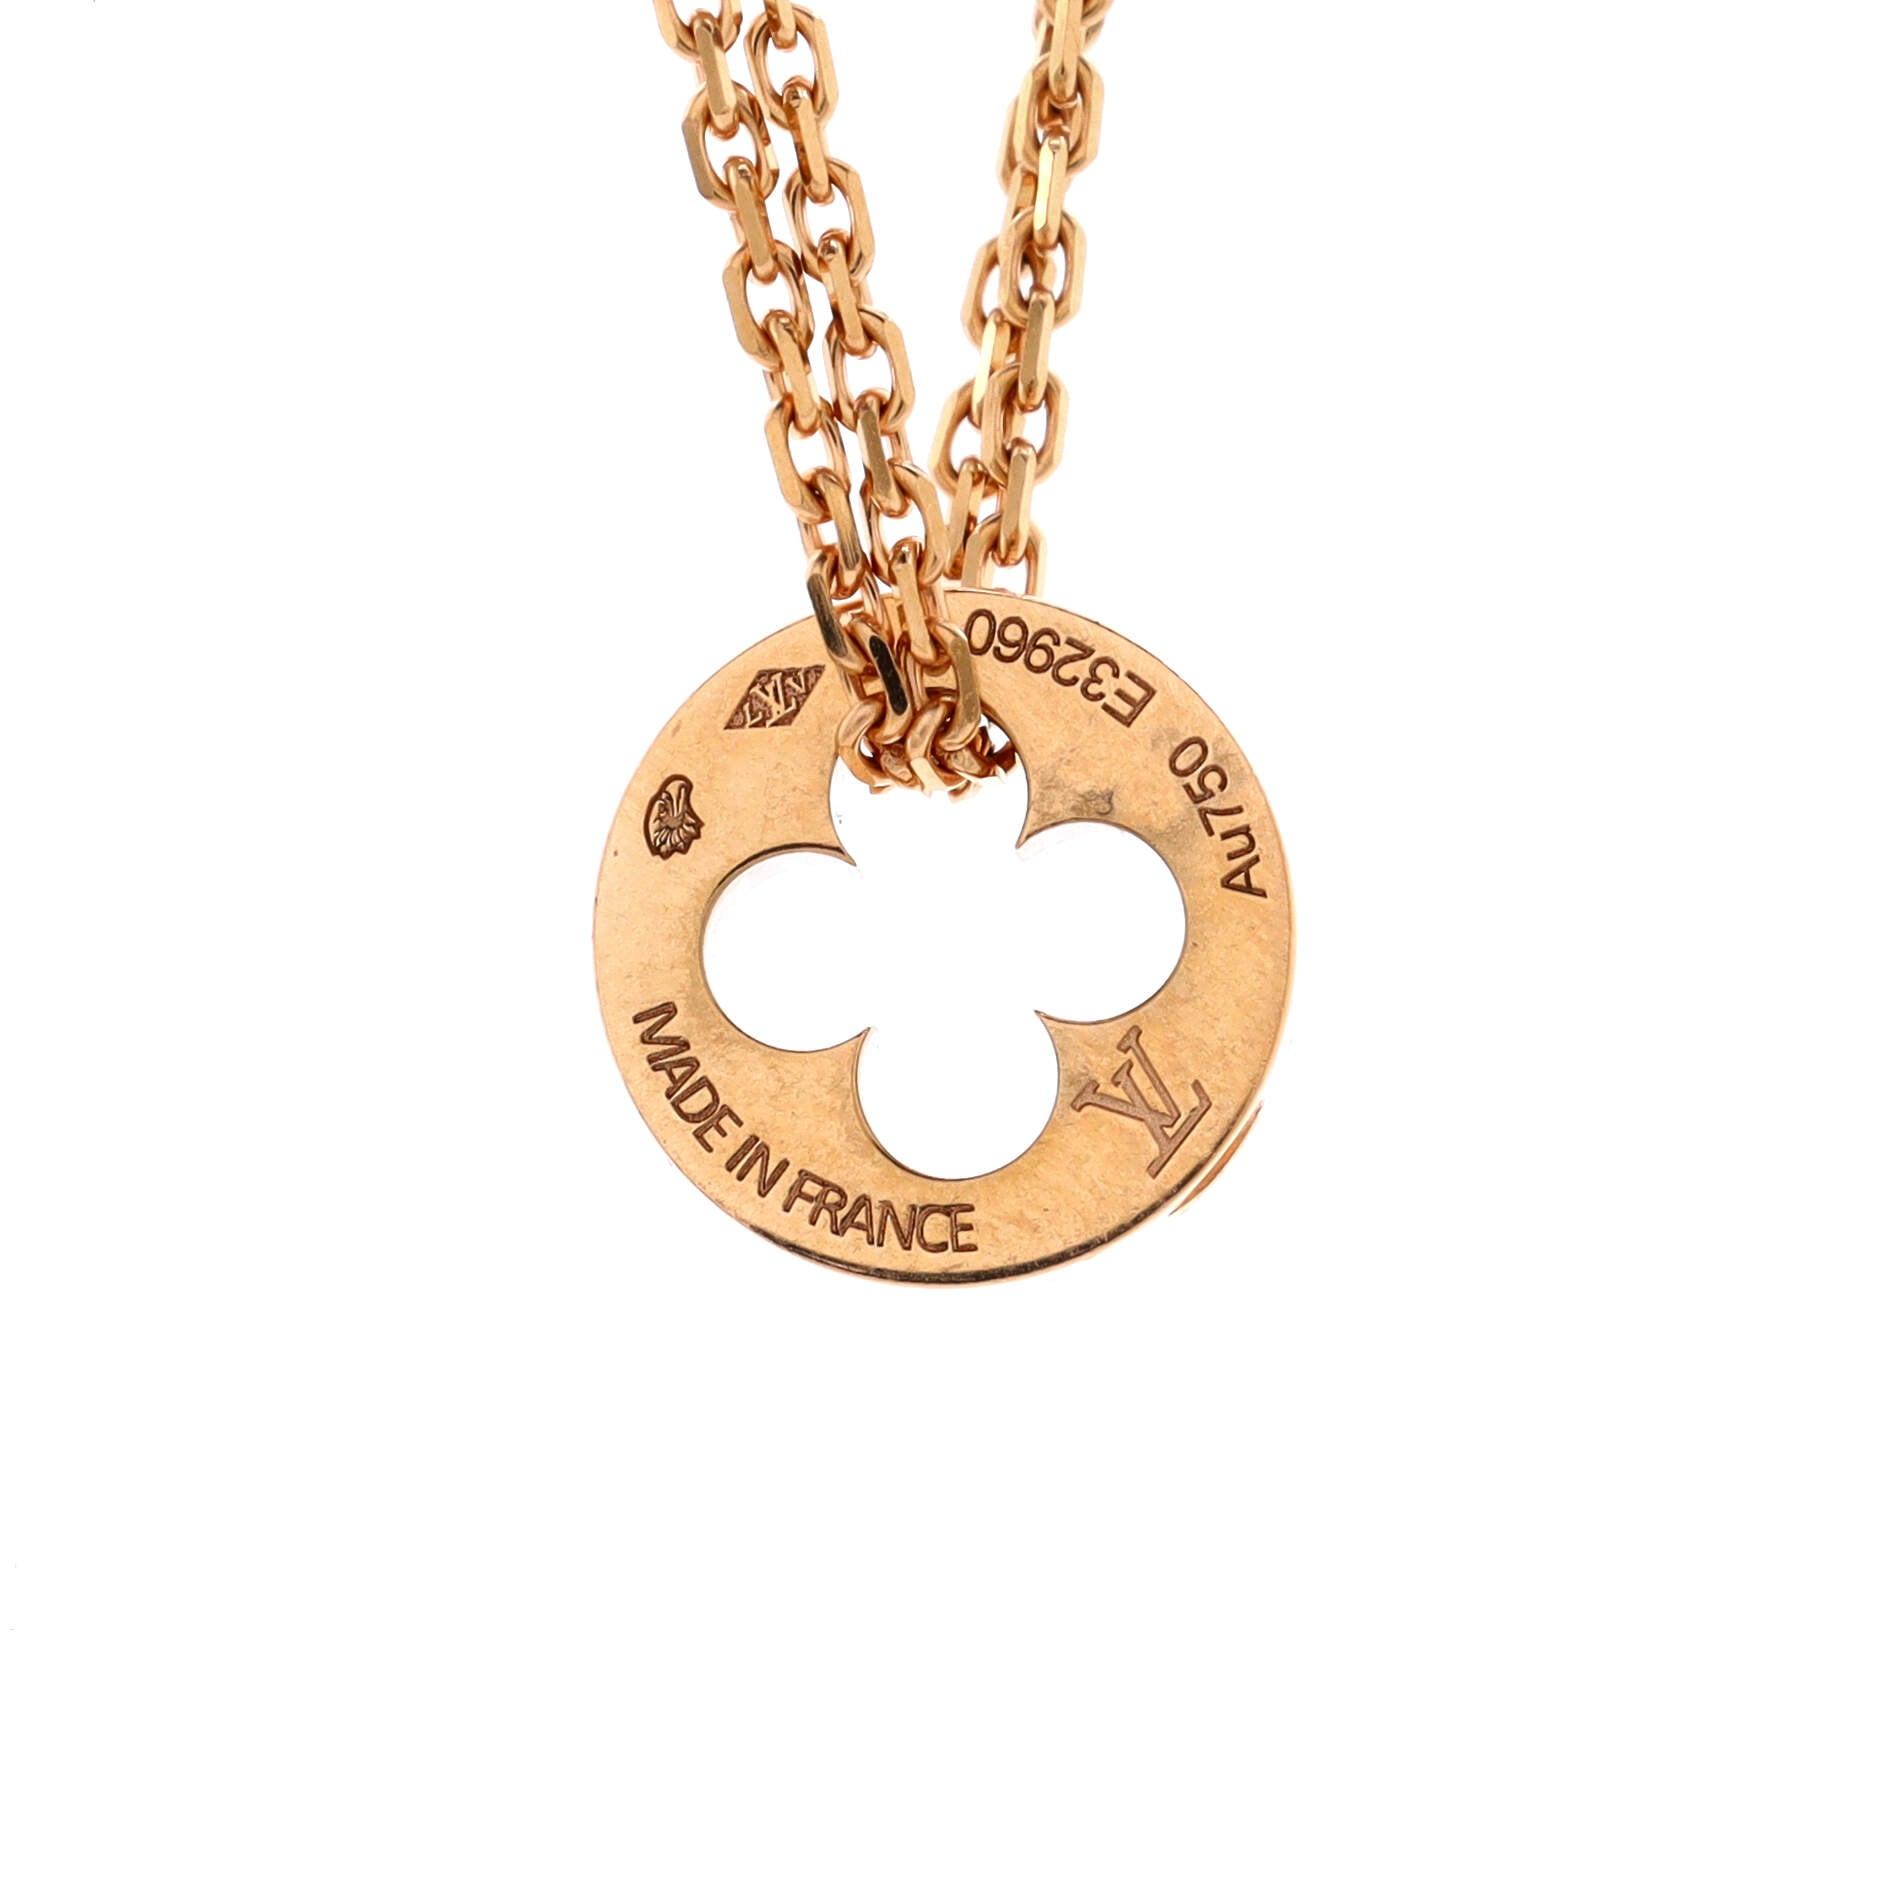 Louis Vuitton, Jewelry, Louis Vuitton Color Blossom Bb Sun Pendant  Necklace 8k Rose Gold With Malachite